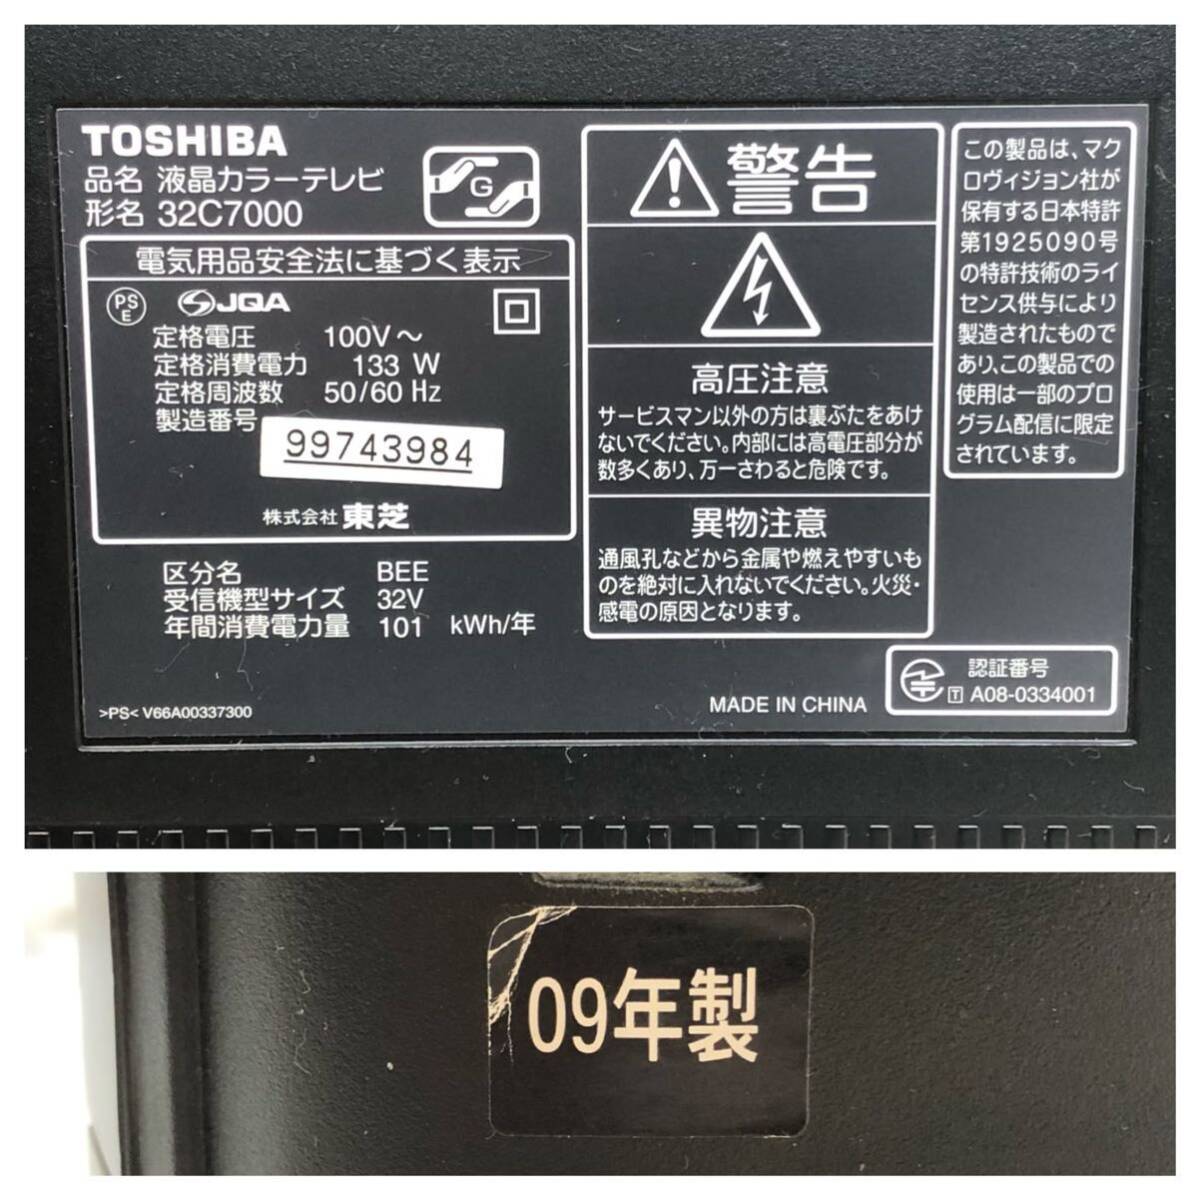 5/13a9 テレビ TOSHIBA REGZA 32C7000 東芝 レグザ 32型 2009年製 フルハイビジョン 液晶テレビ 通電確認済み_画像7